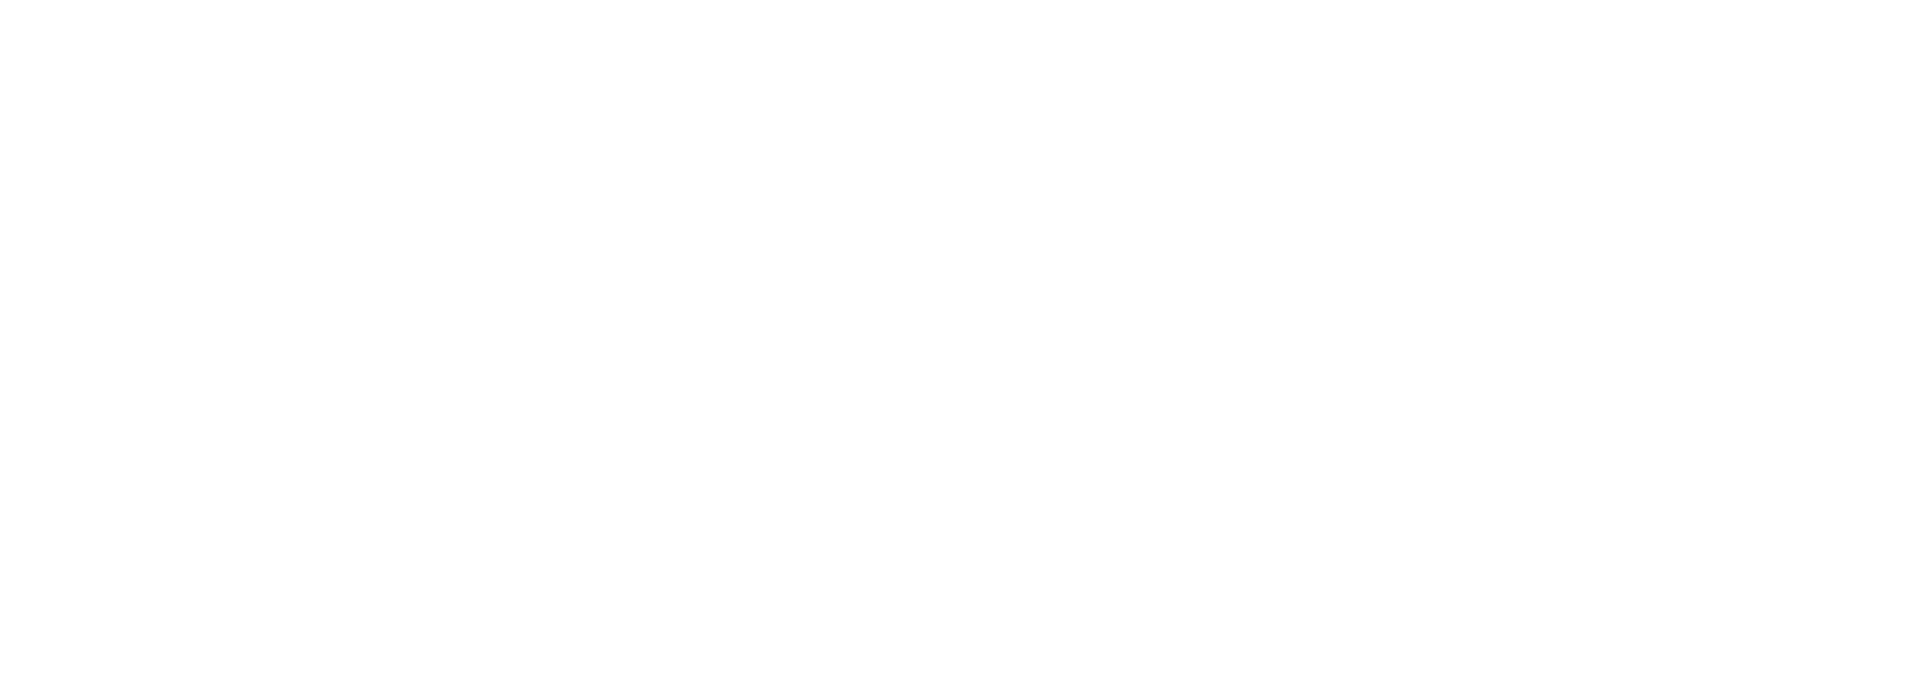 Santa Rita Jail Solidarity